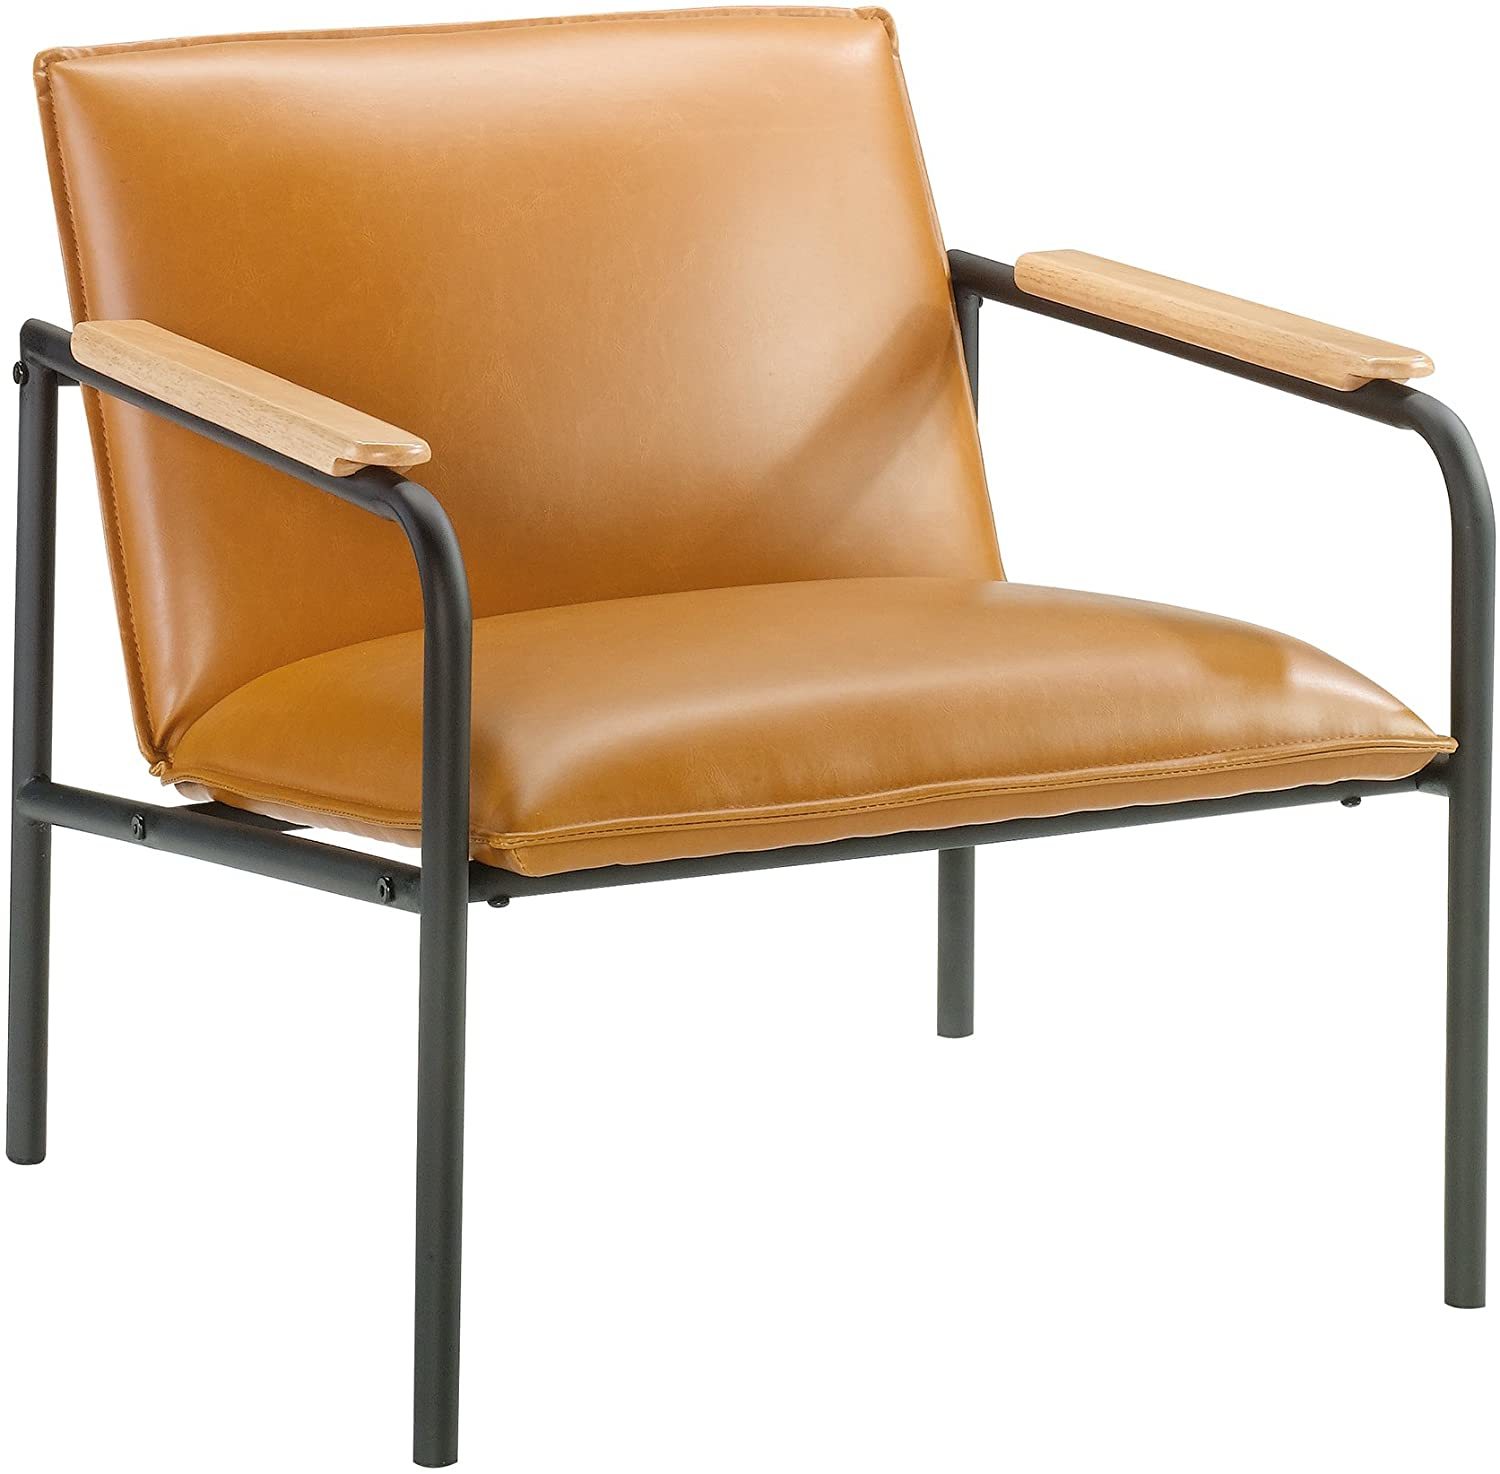 Sauder Boulevard Café Lounge Chair, Camel finish - $161.99